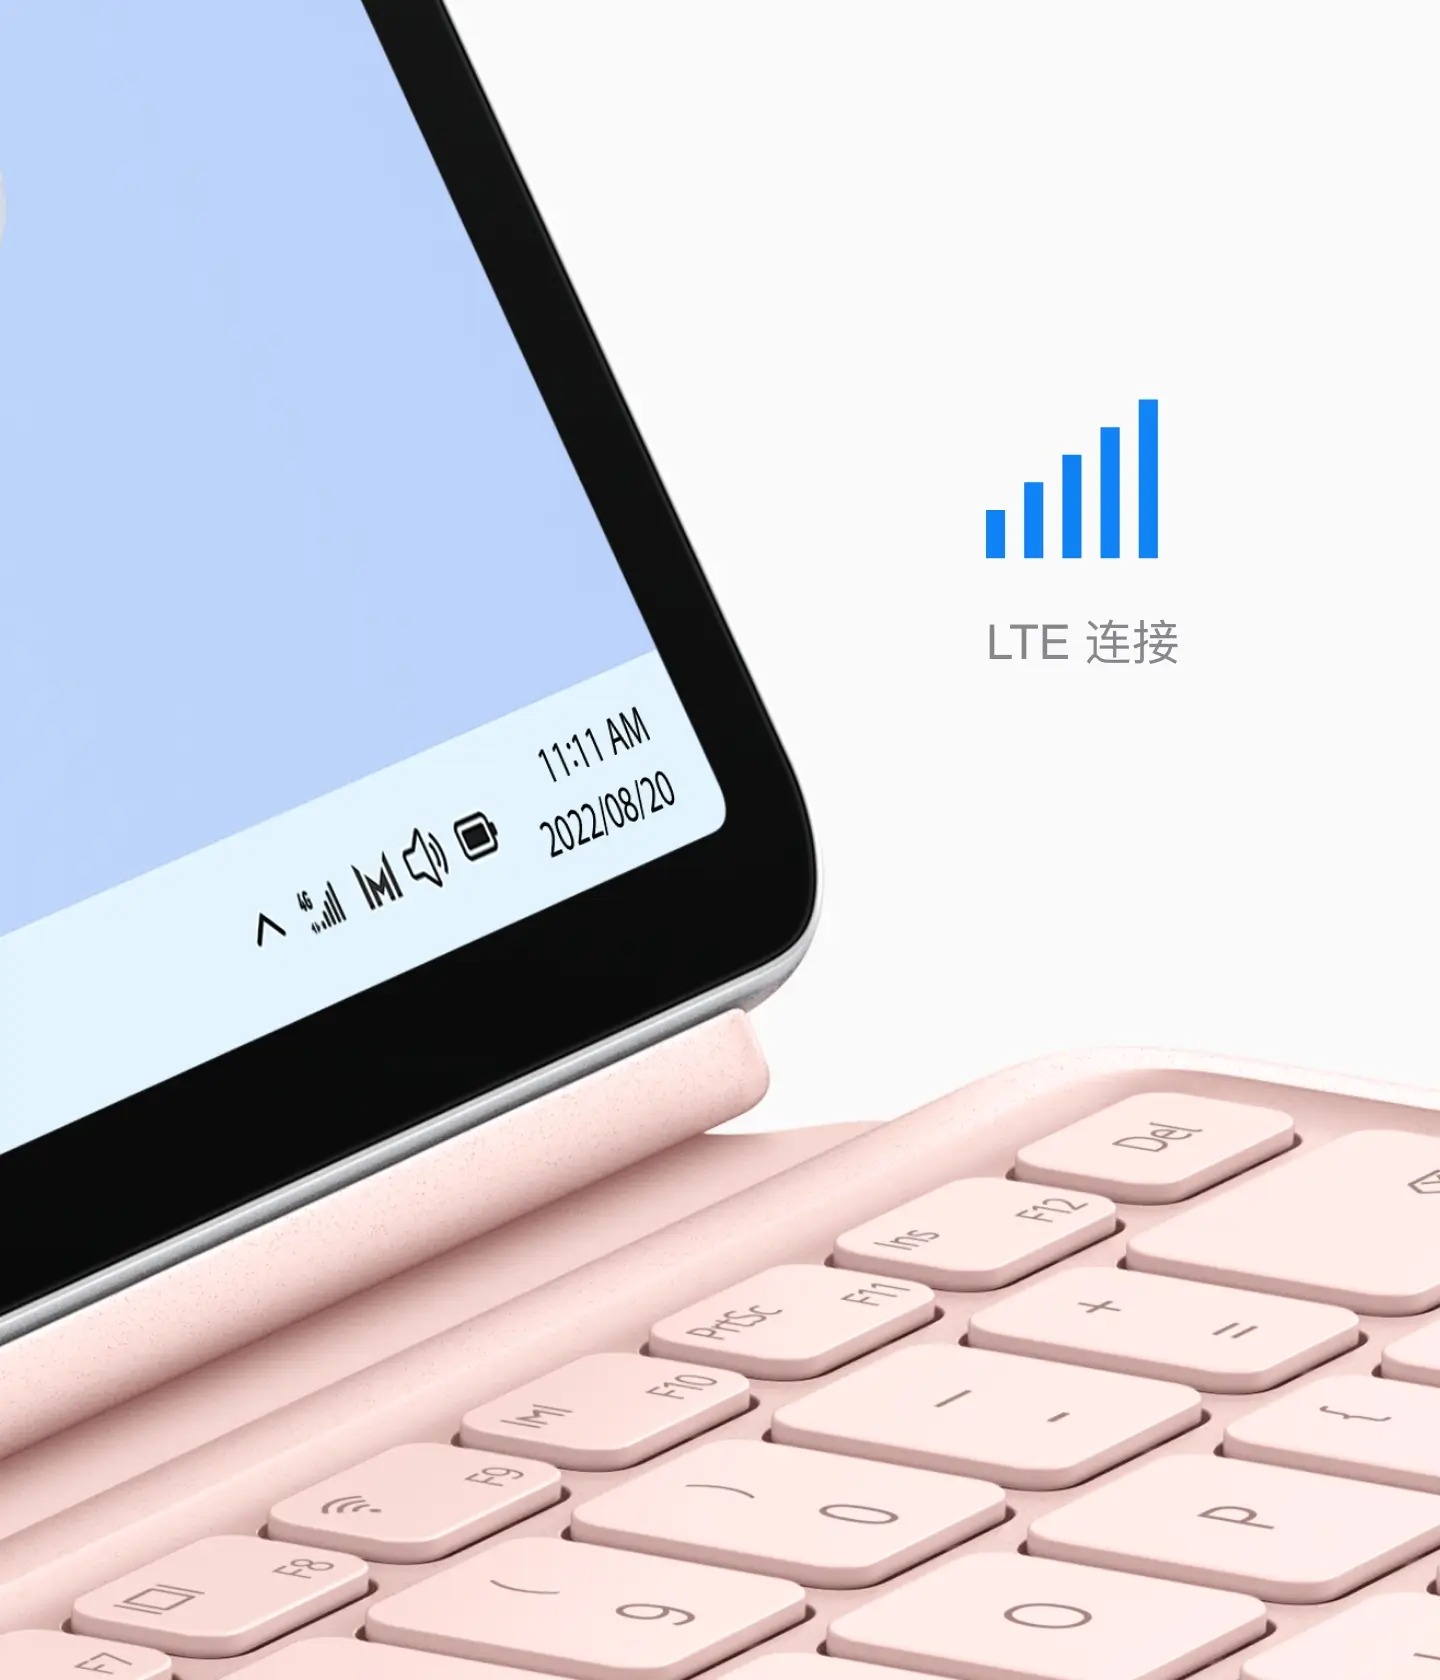 Huawei MateBook E Go